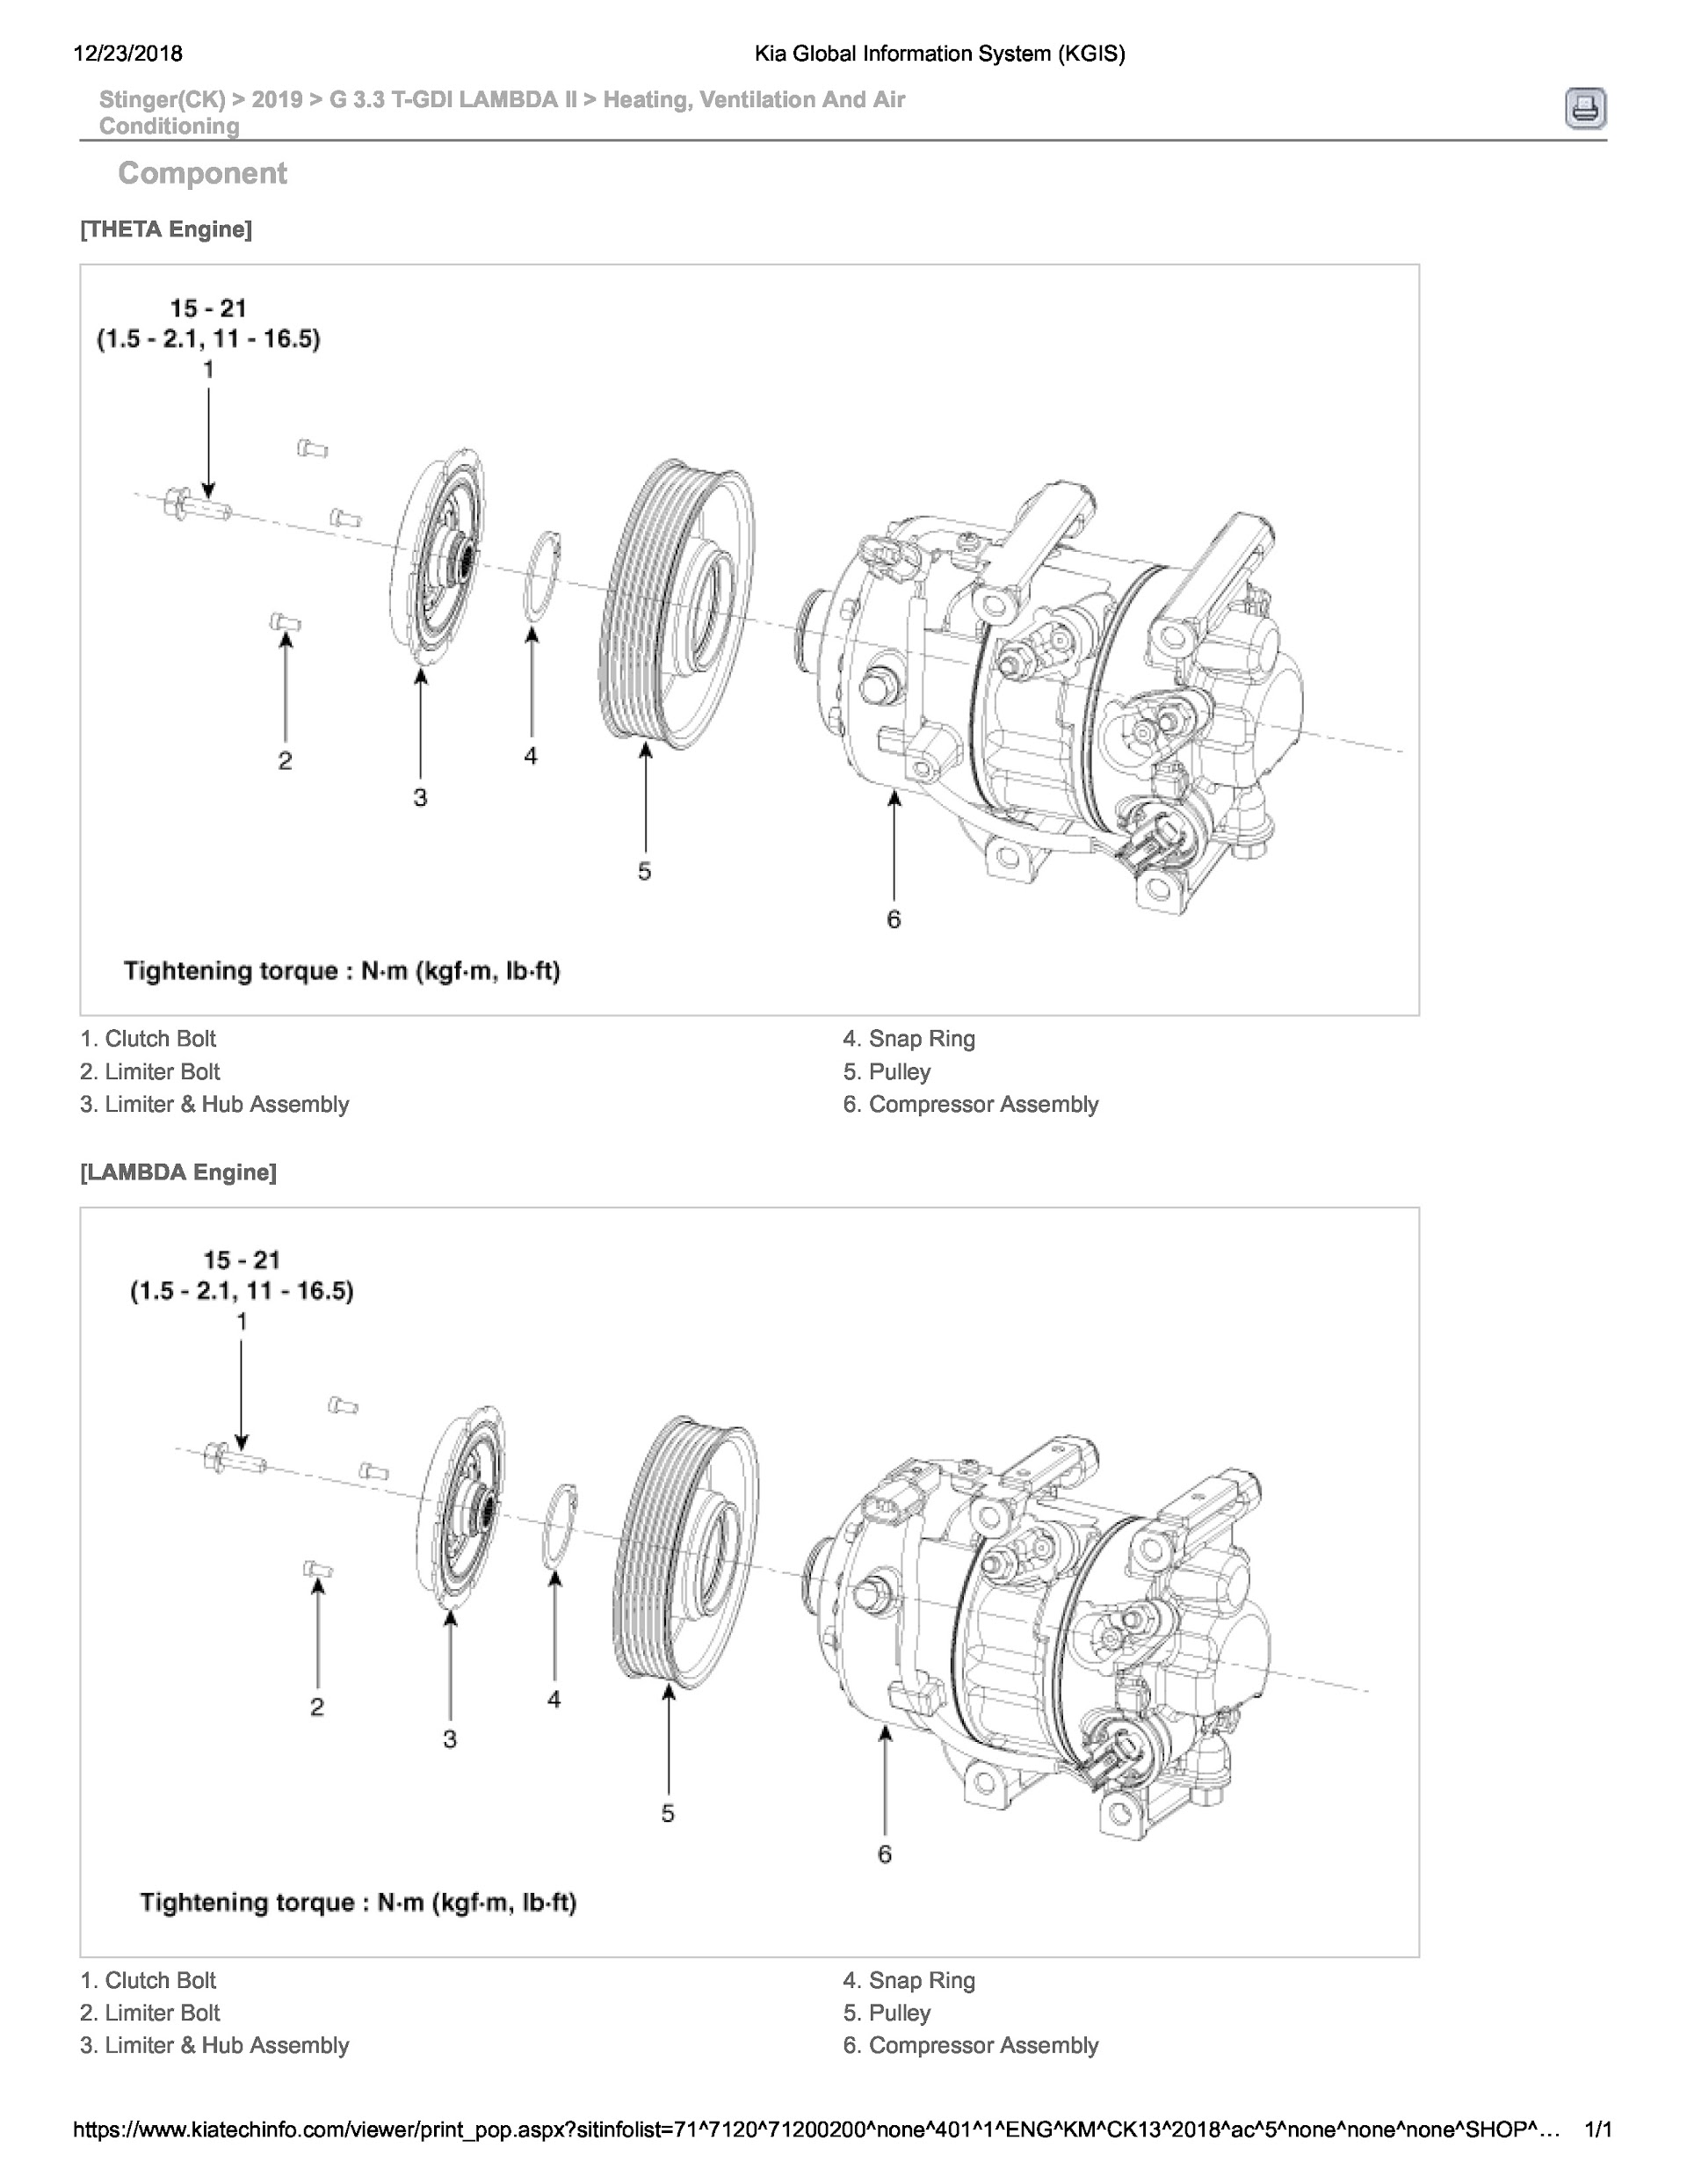 2019 Kia Stinger Repair Manual, Theta Engine Component Location